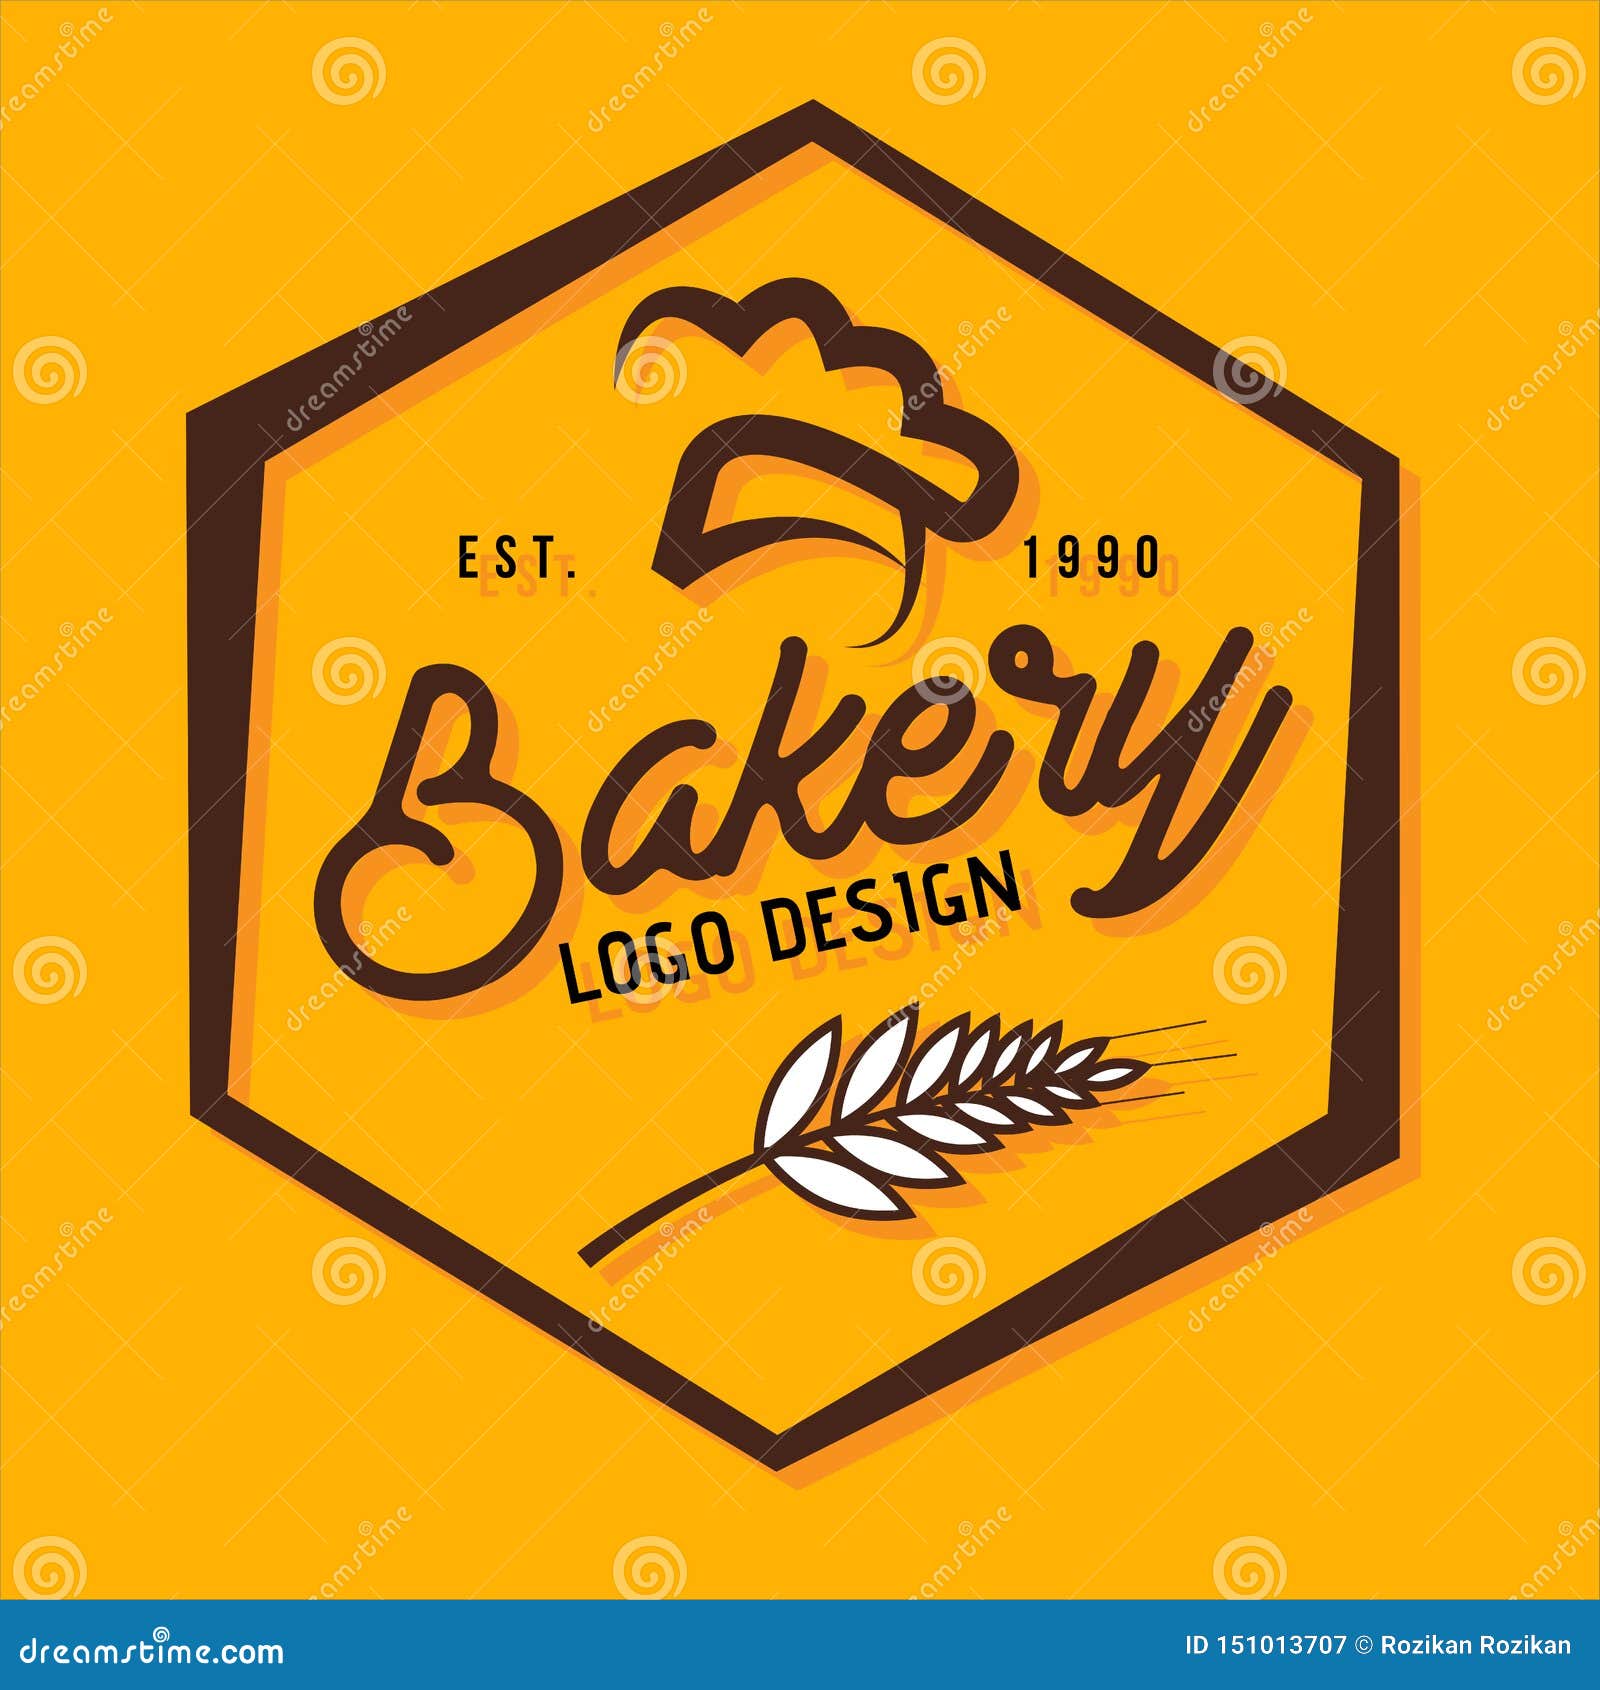 Bakery Logo Design Polygon Stock Illustration Illustration Of Corporate